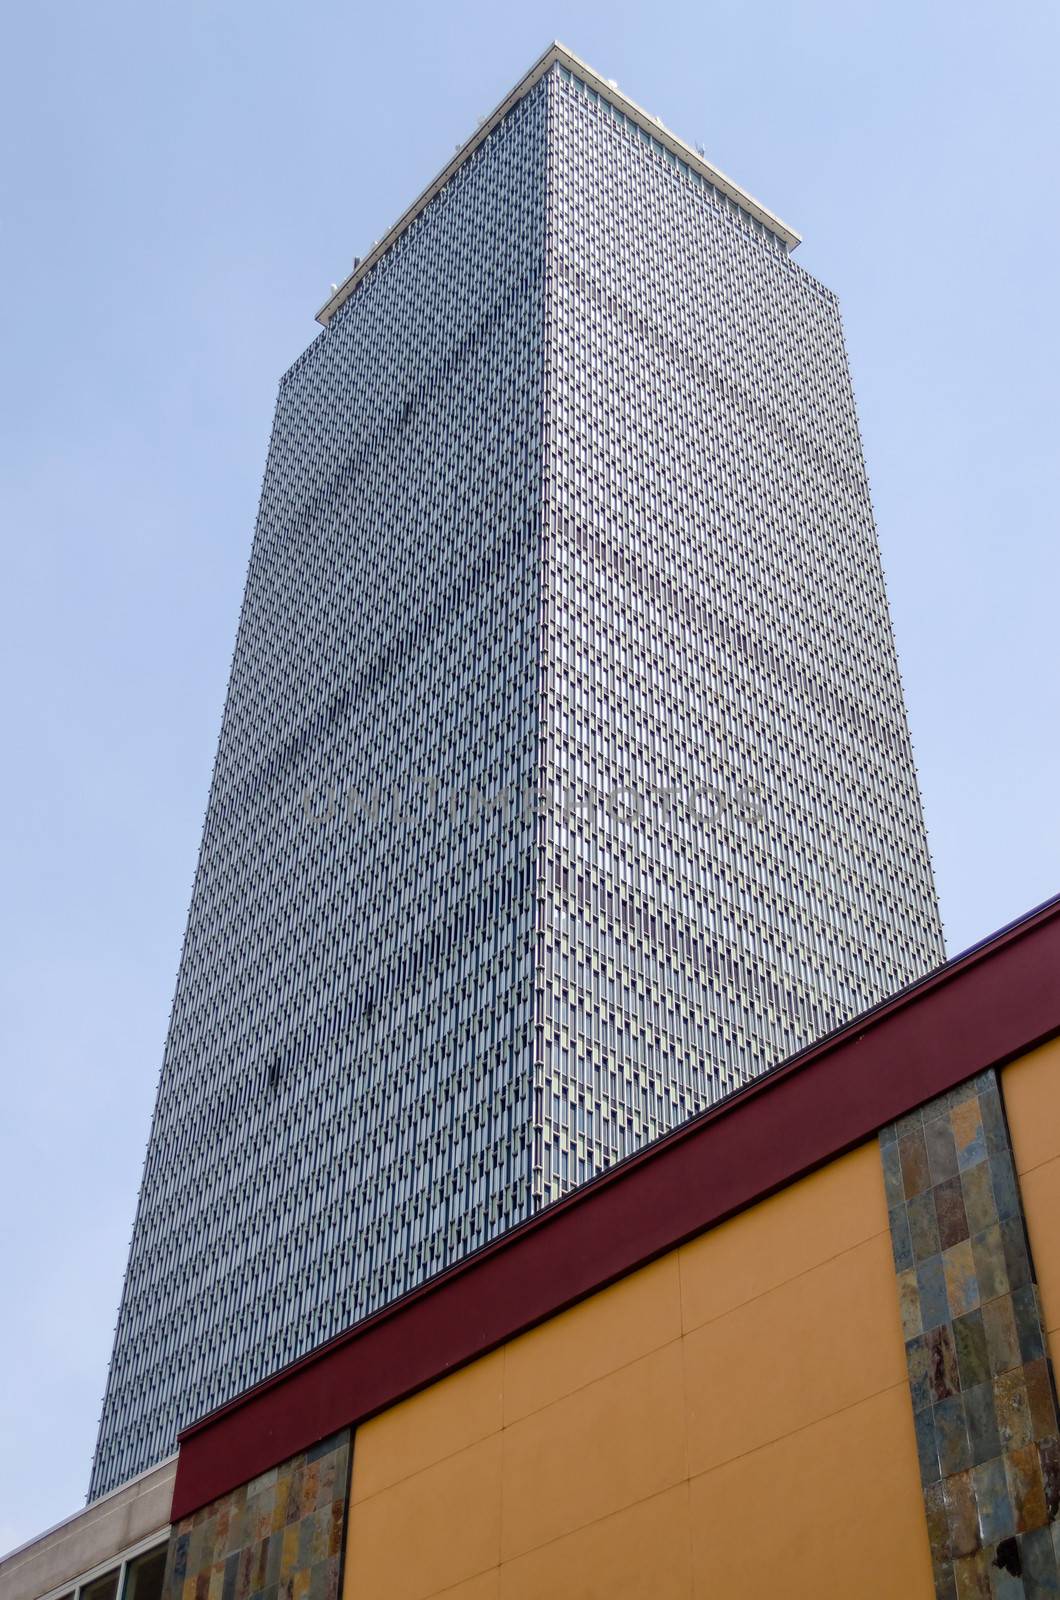 Prudential Tower, Boston by marcorubino